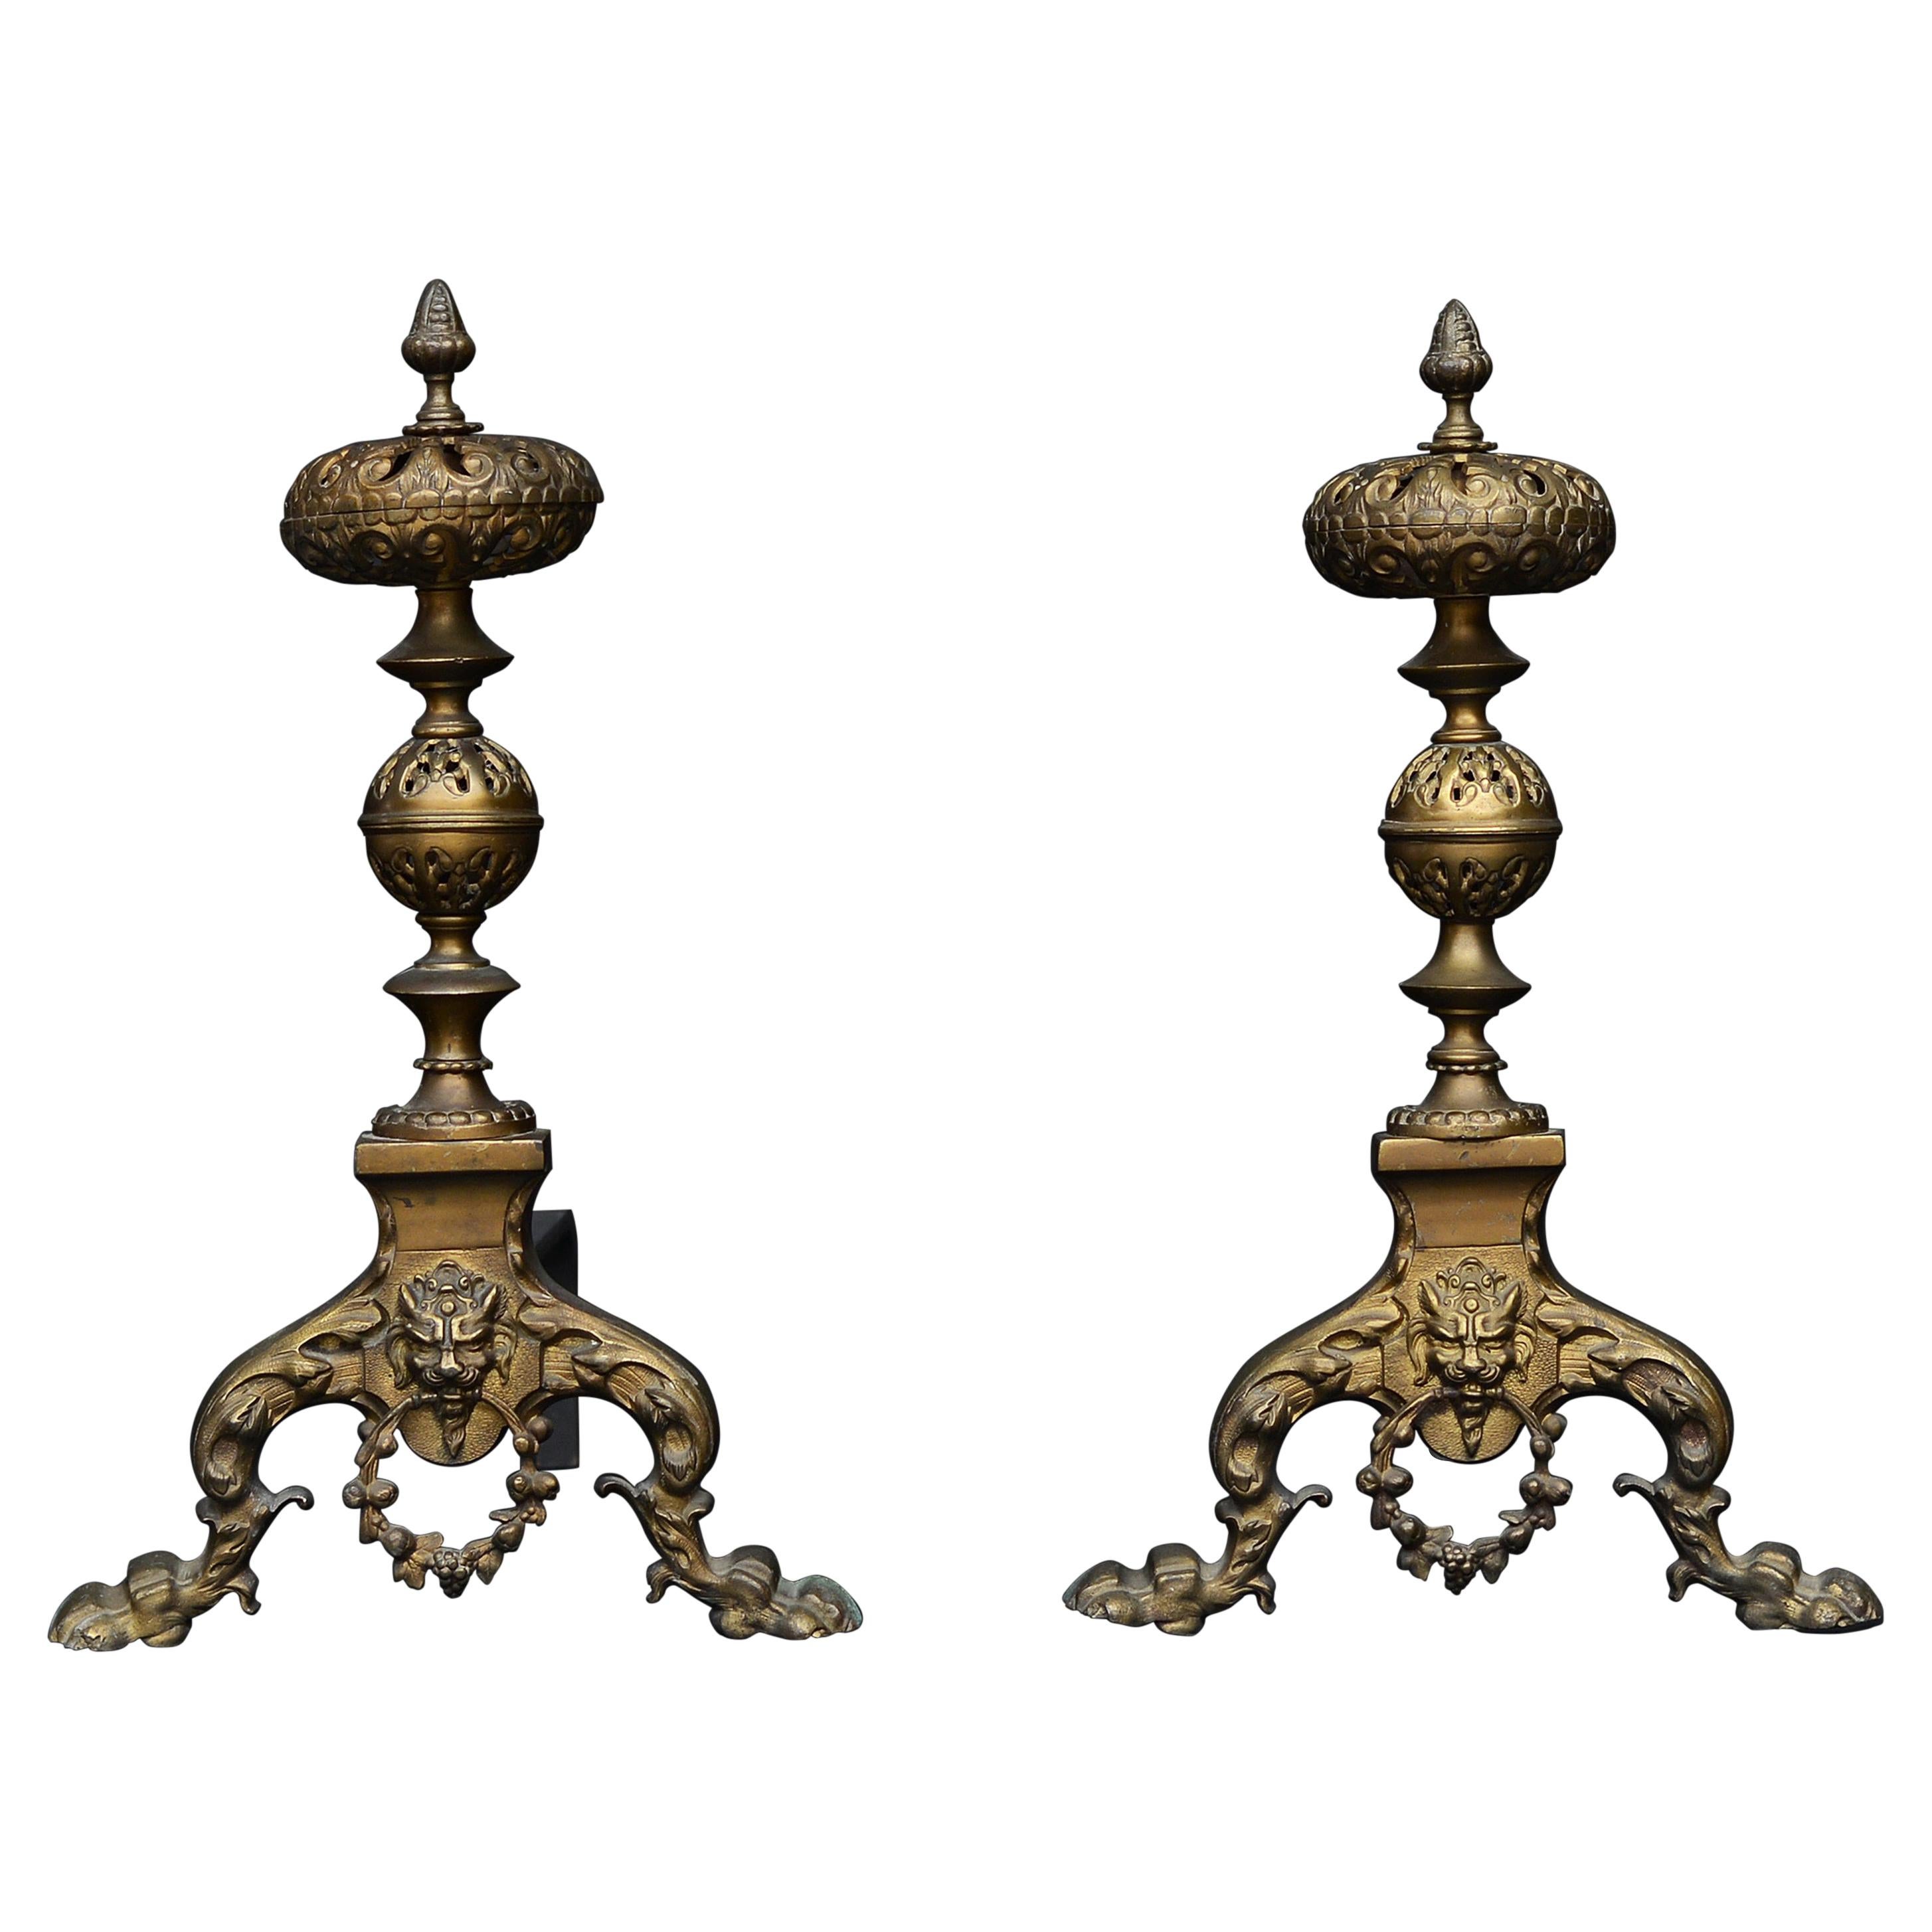 Pair of Ornate Brass Firedogs